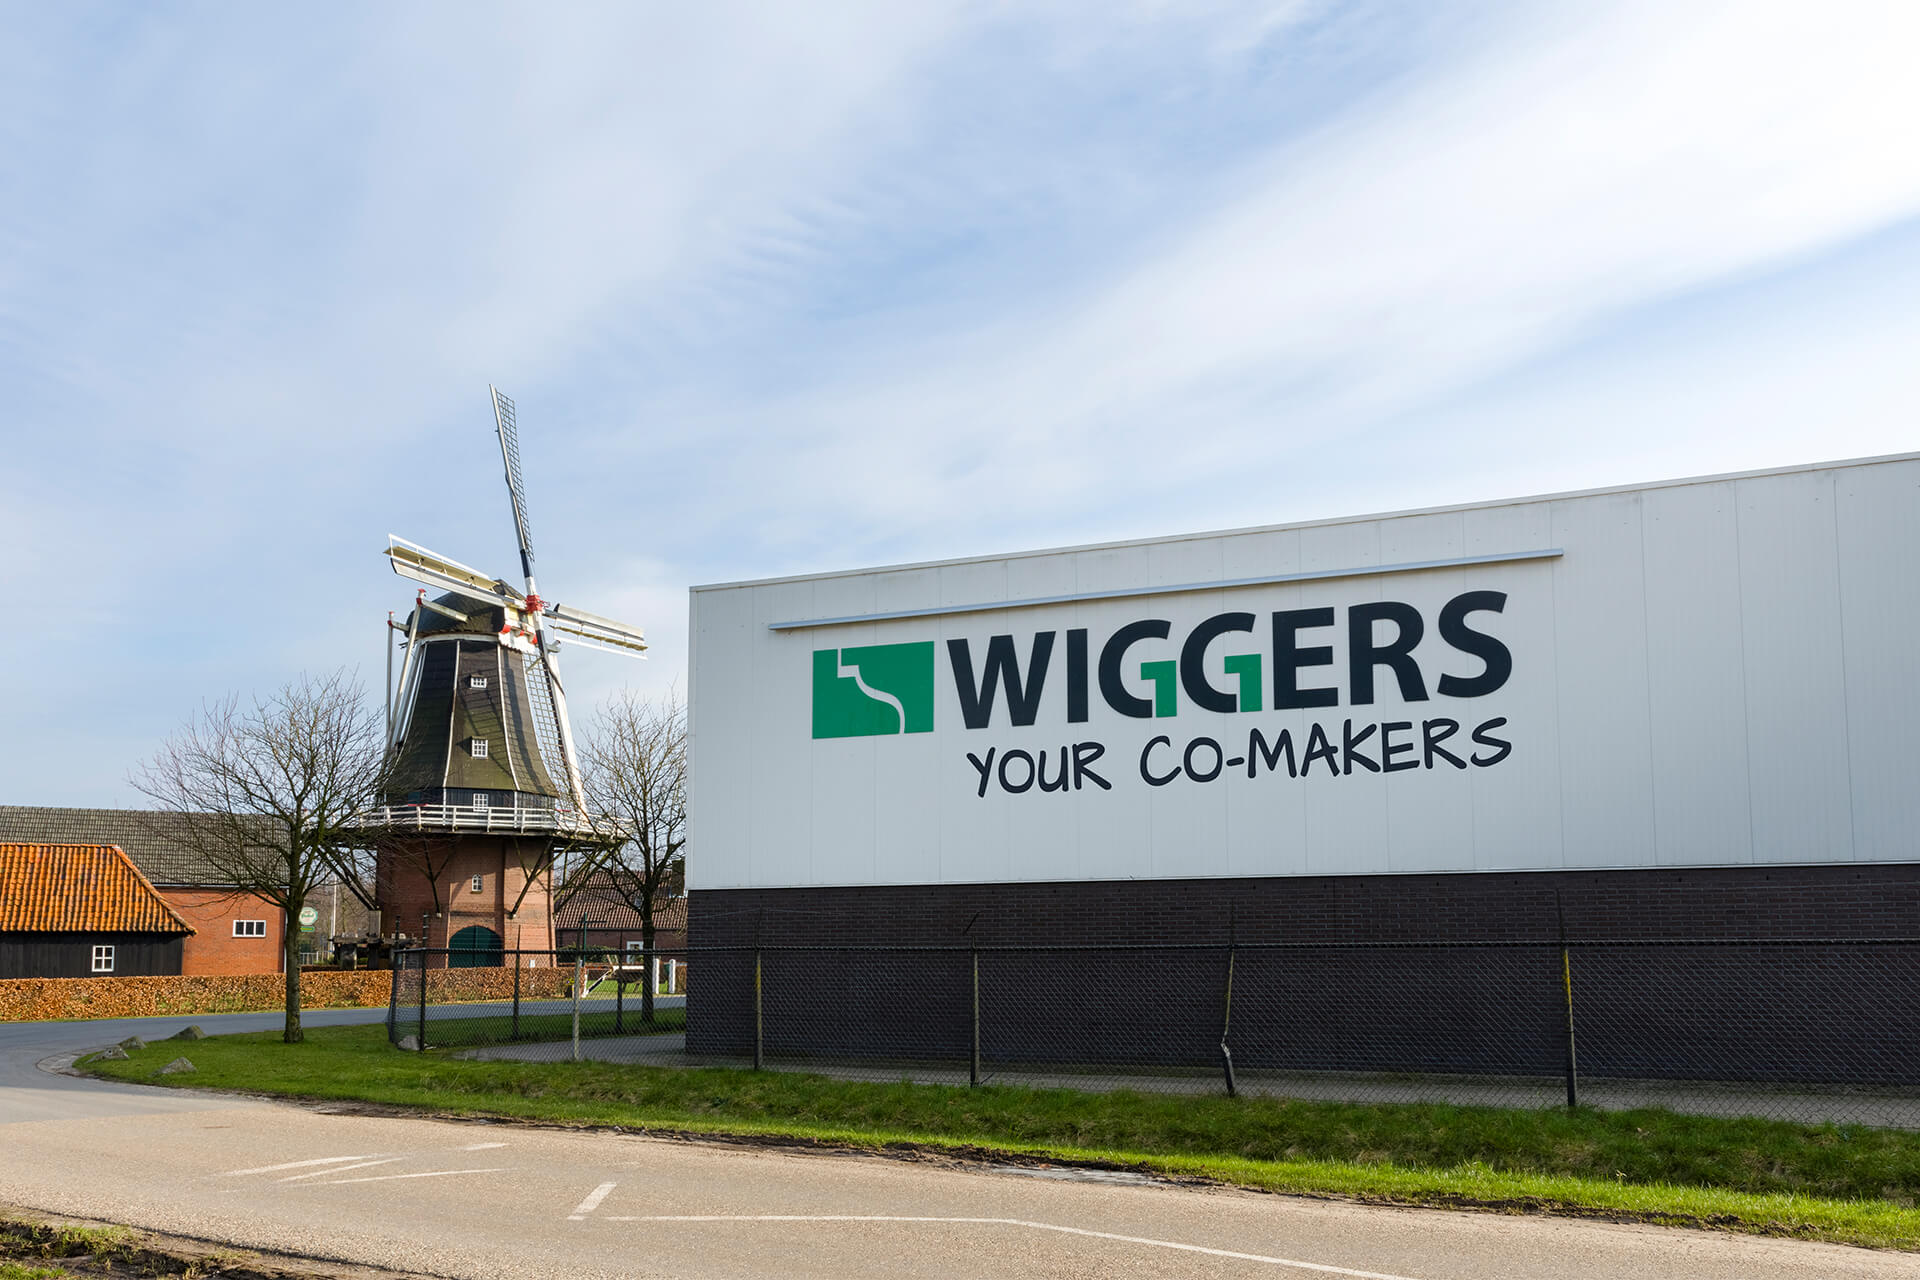 Bedrijfspand Wiggers te Winterswijk